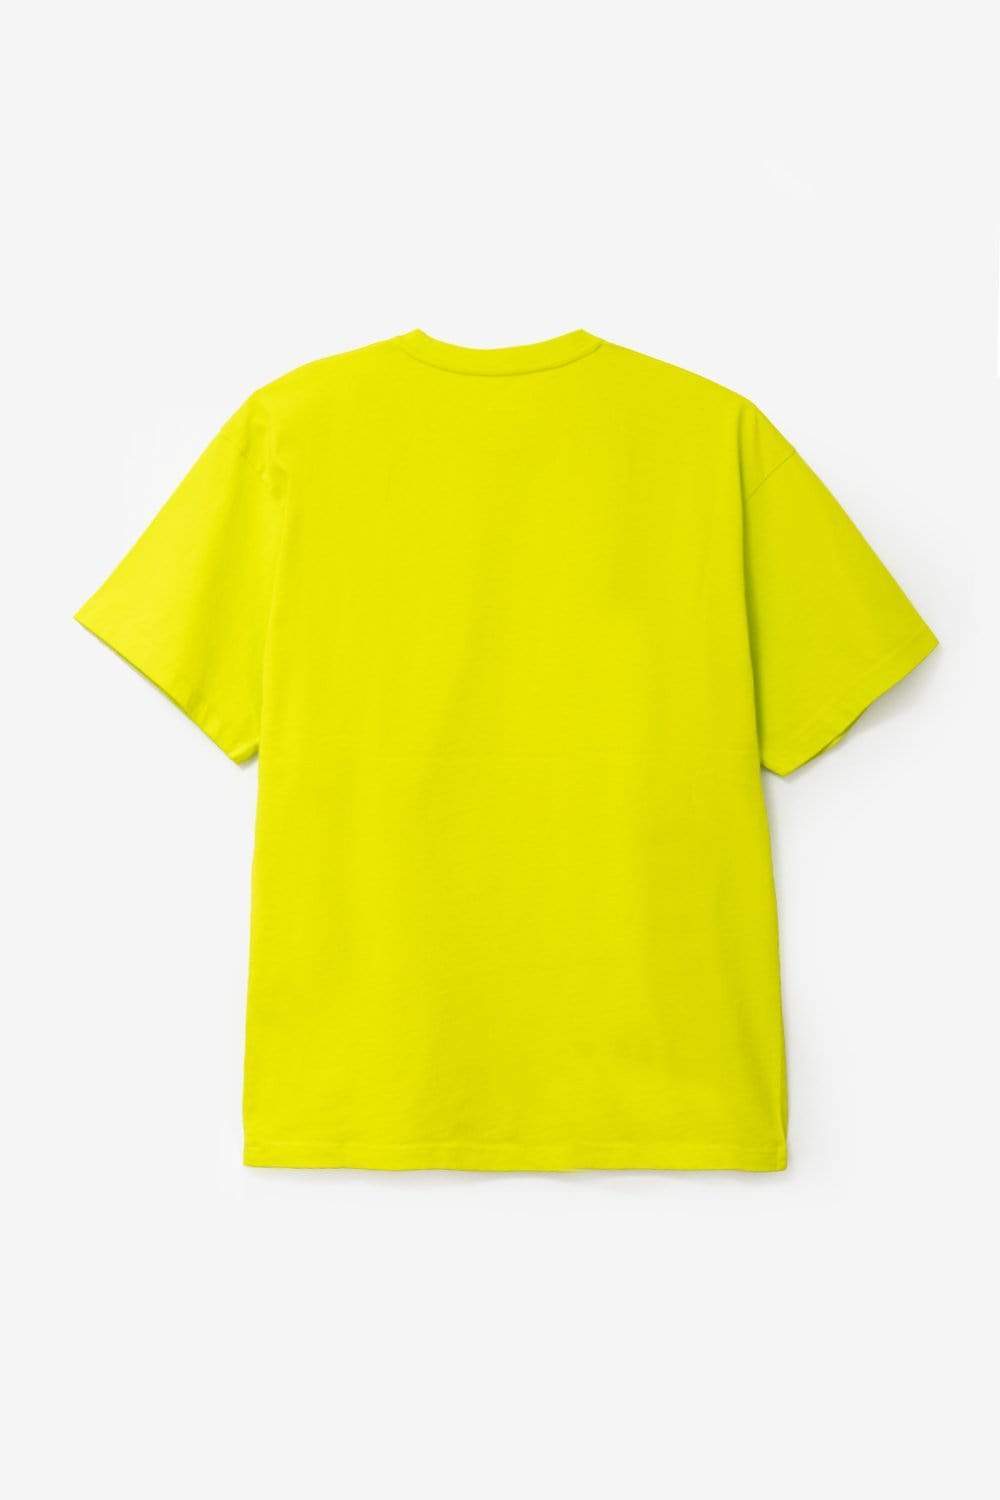 PACC8T003 Printed Short Sleeve T-Shirt